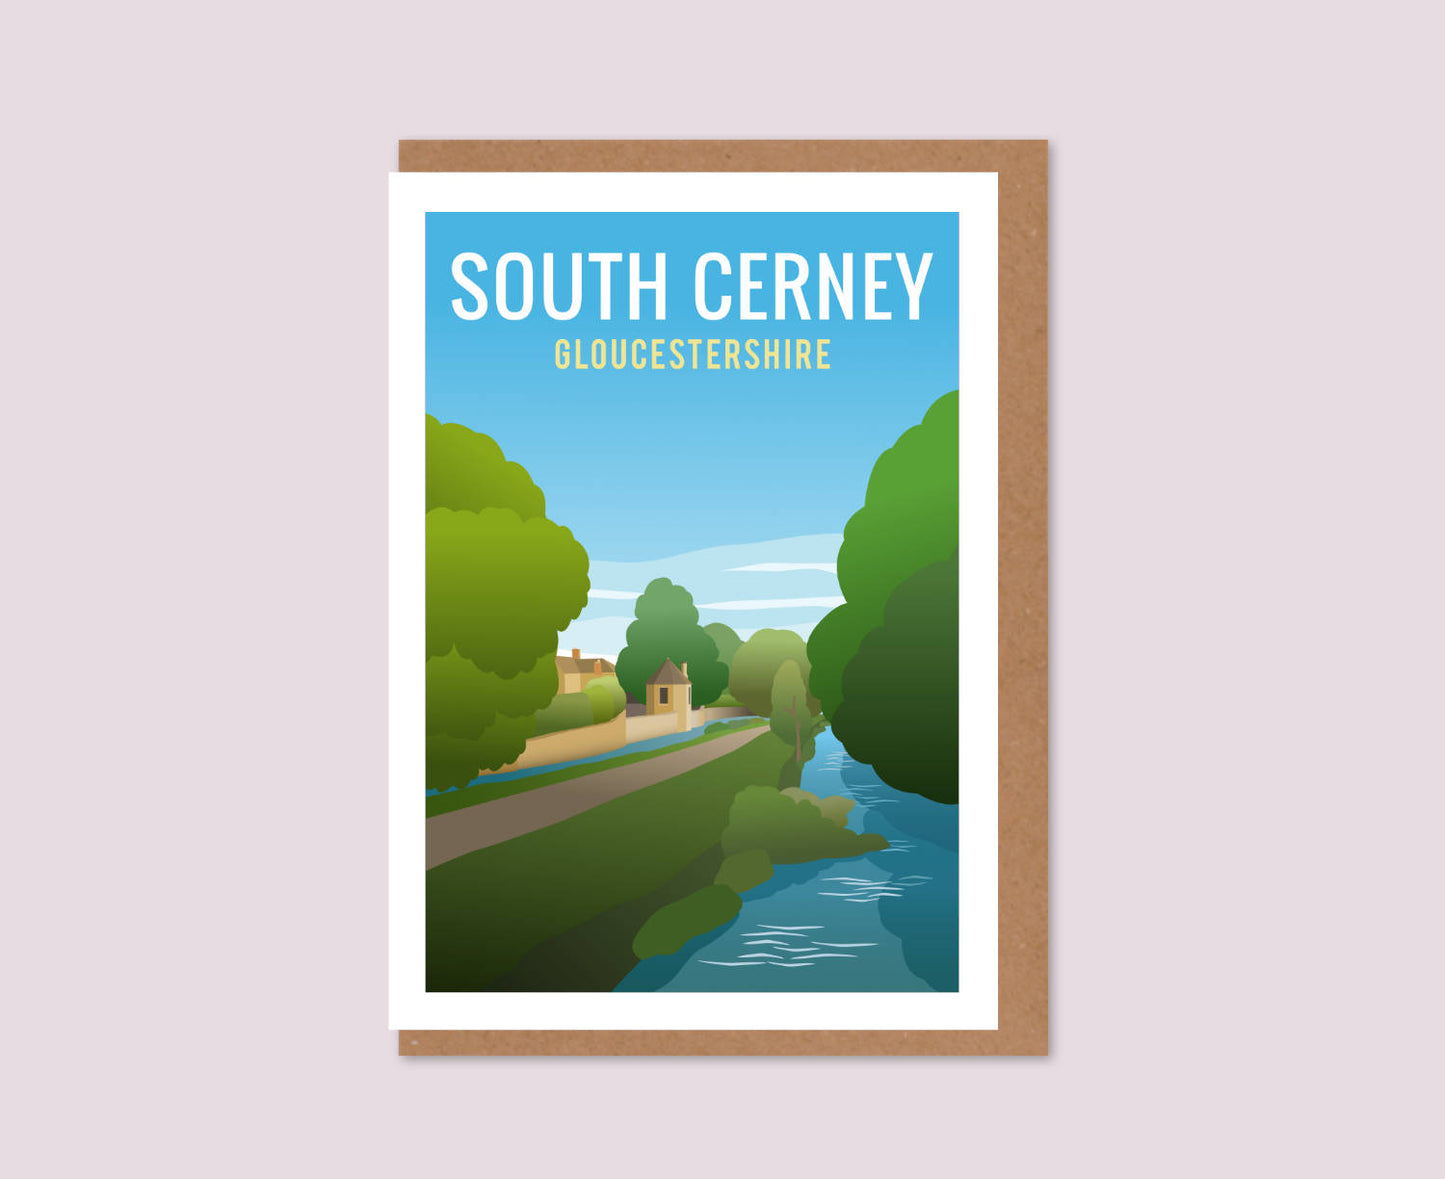 South Cerney Greeeting Card Design